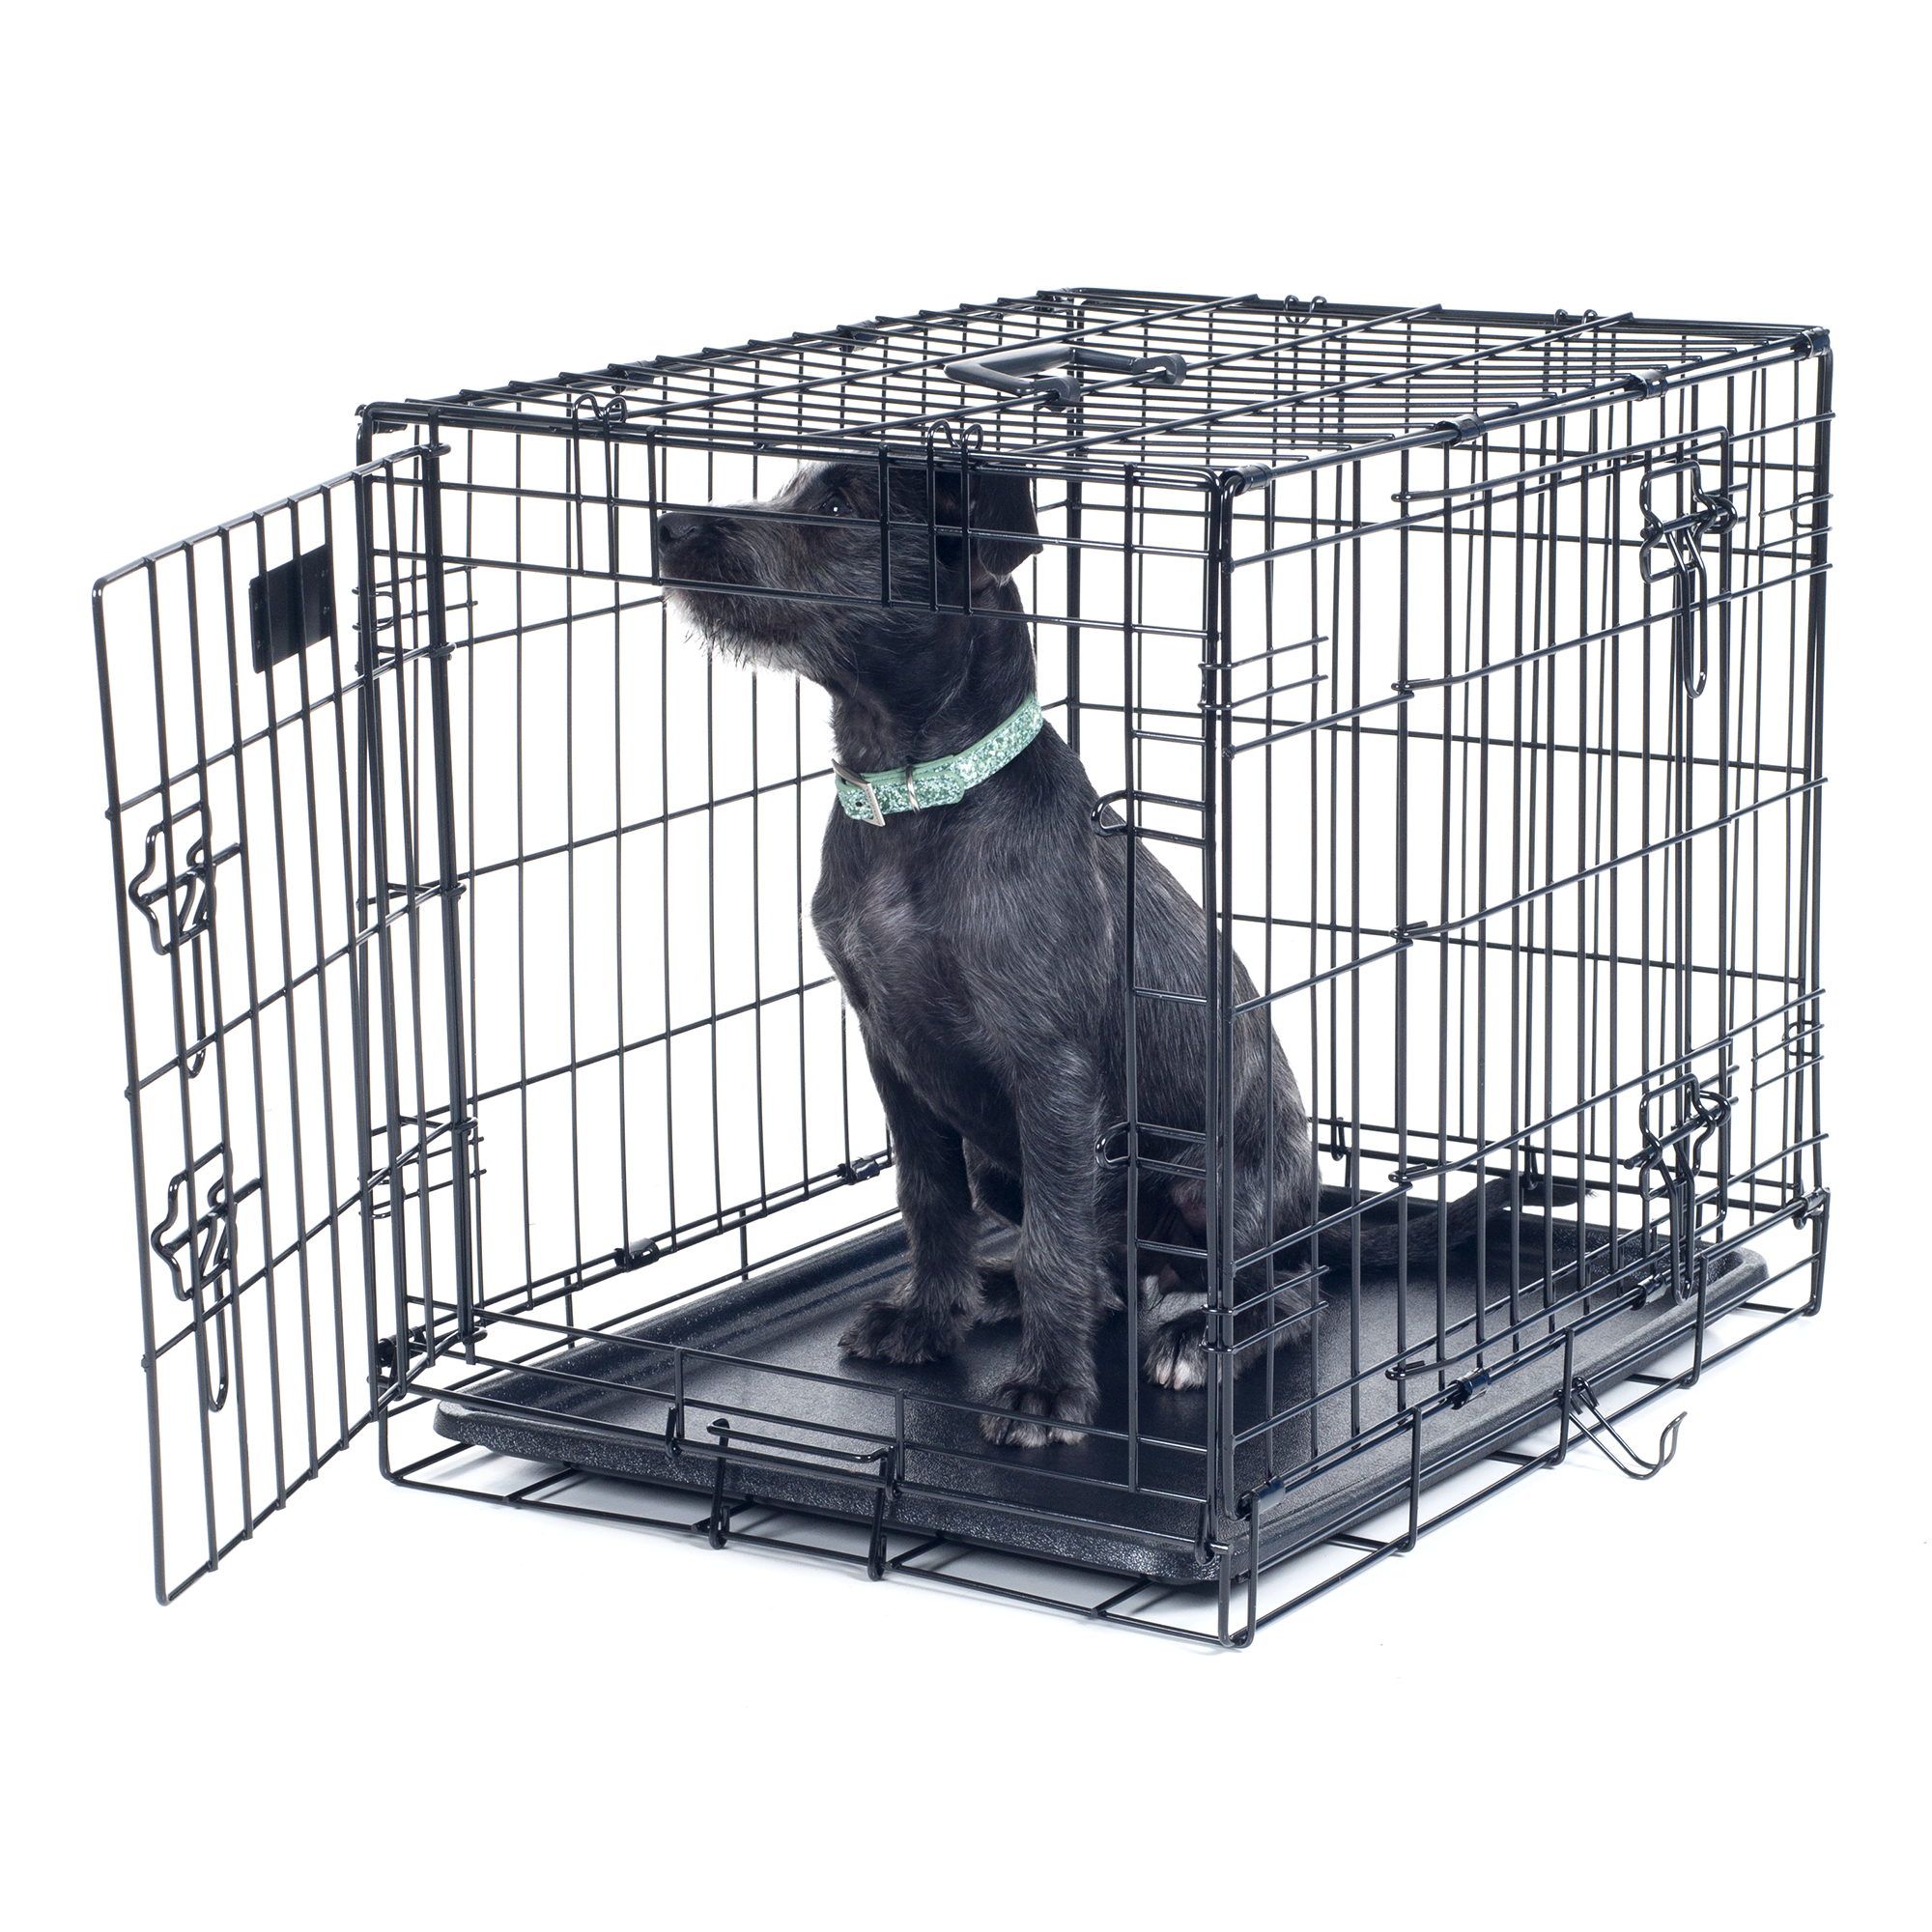 PETMAKER Medium 2 Door Foldable Dog Crate Cage 30 x 19 Inch